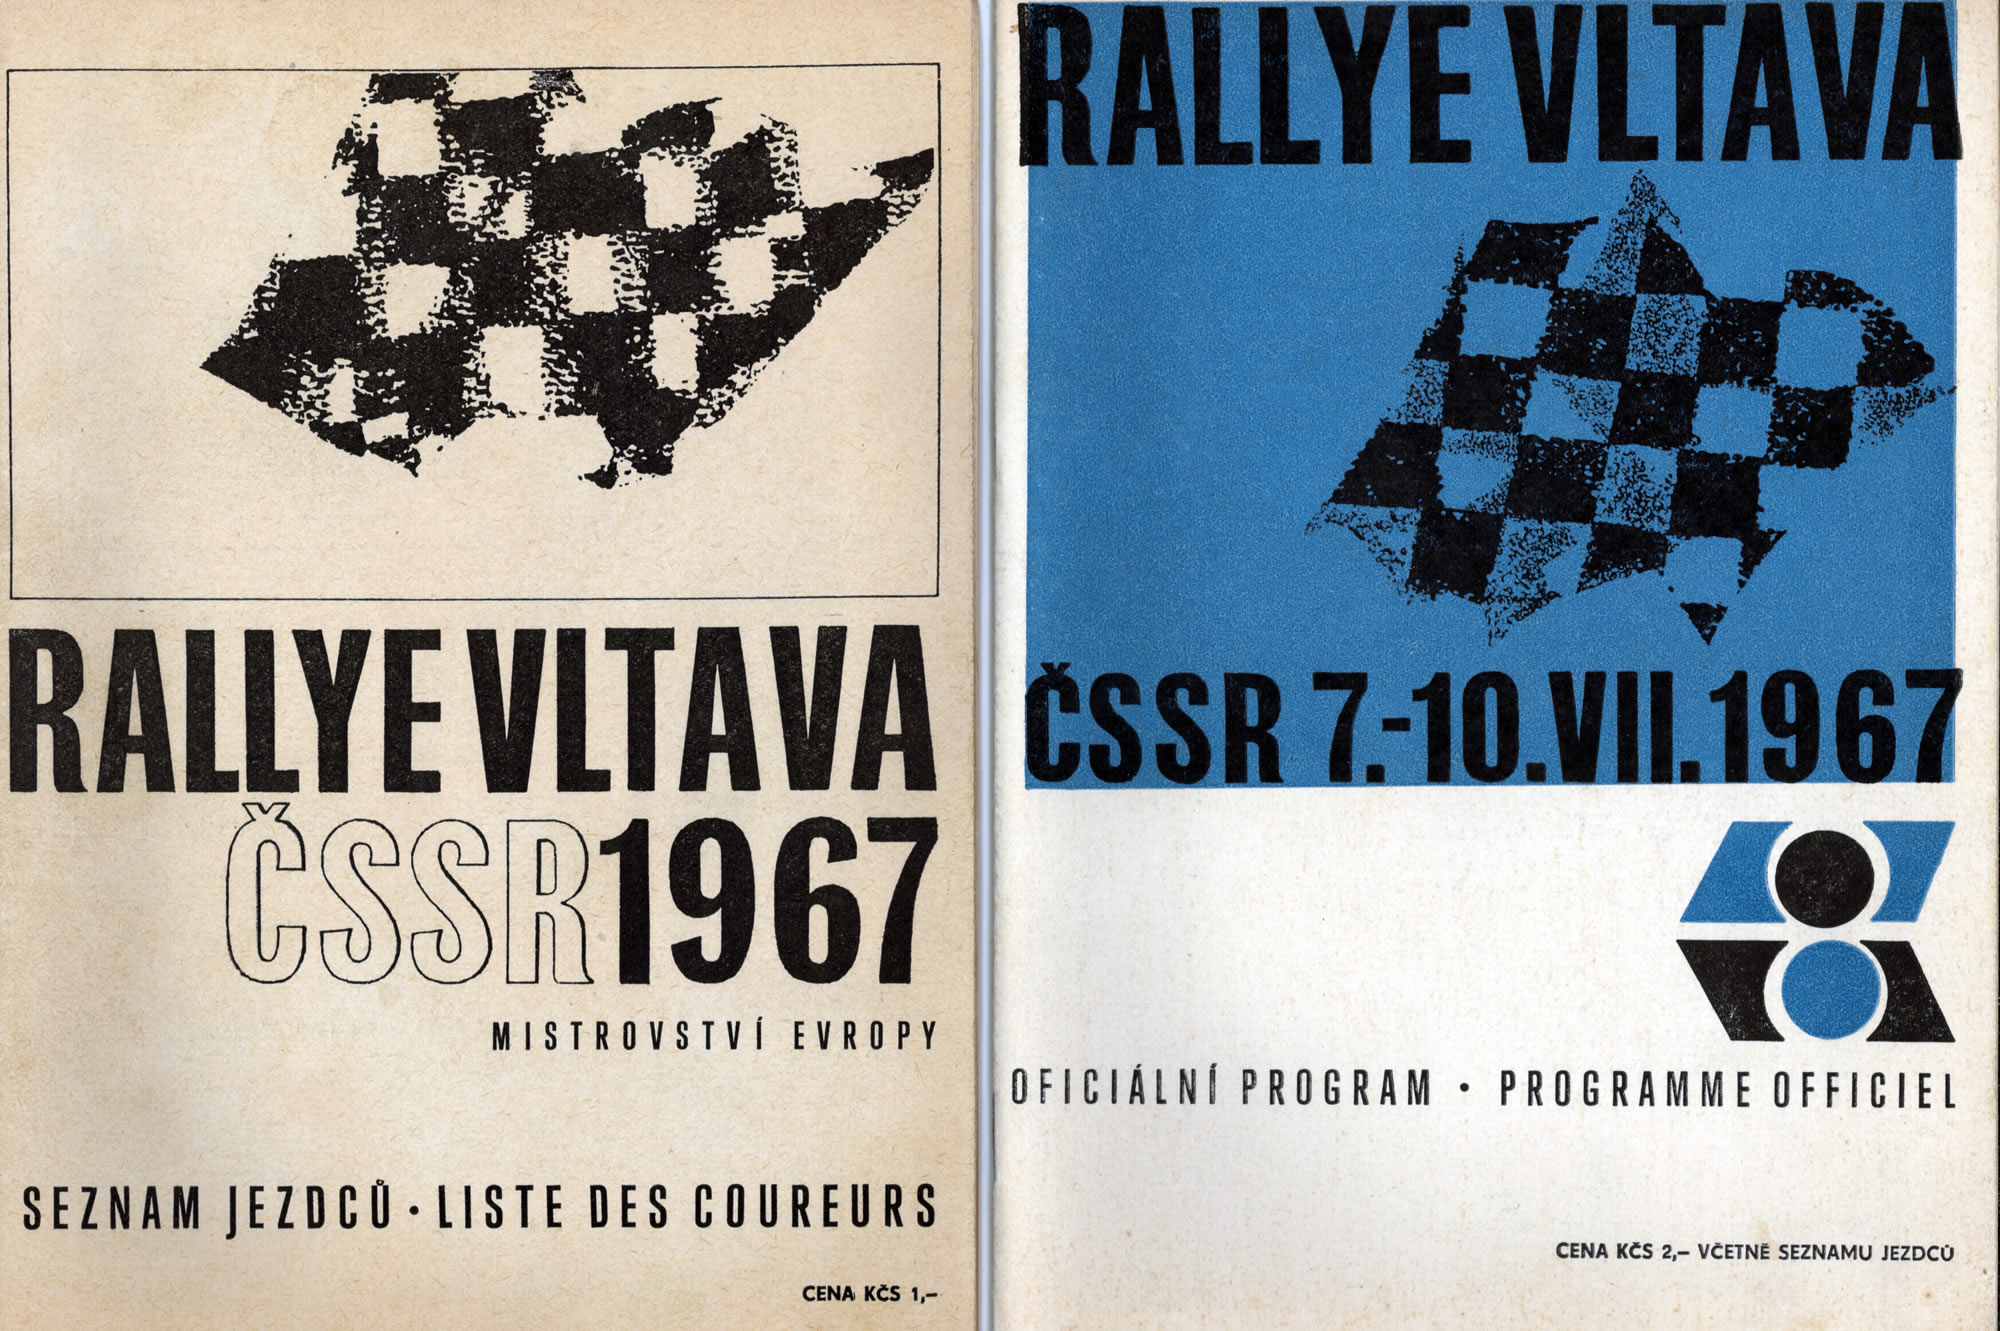 Rallye Vltava 1967